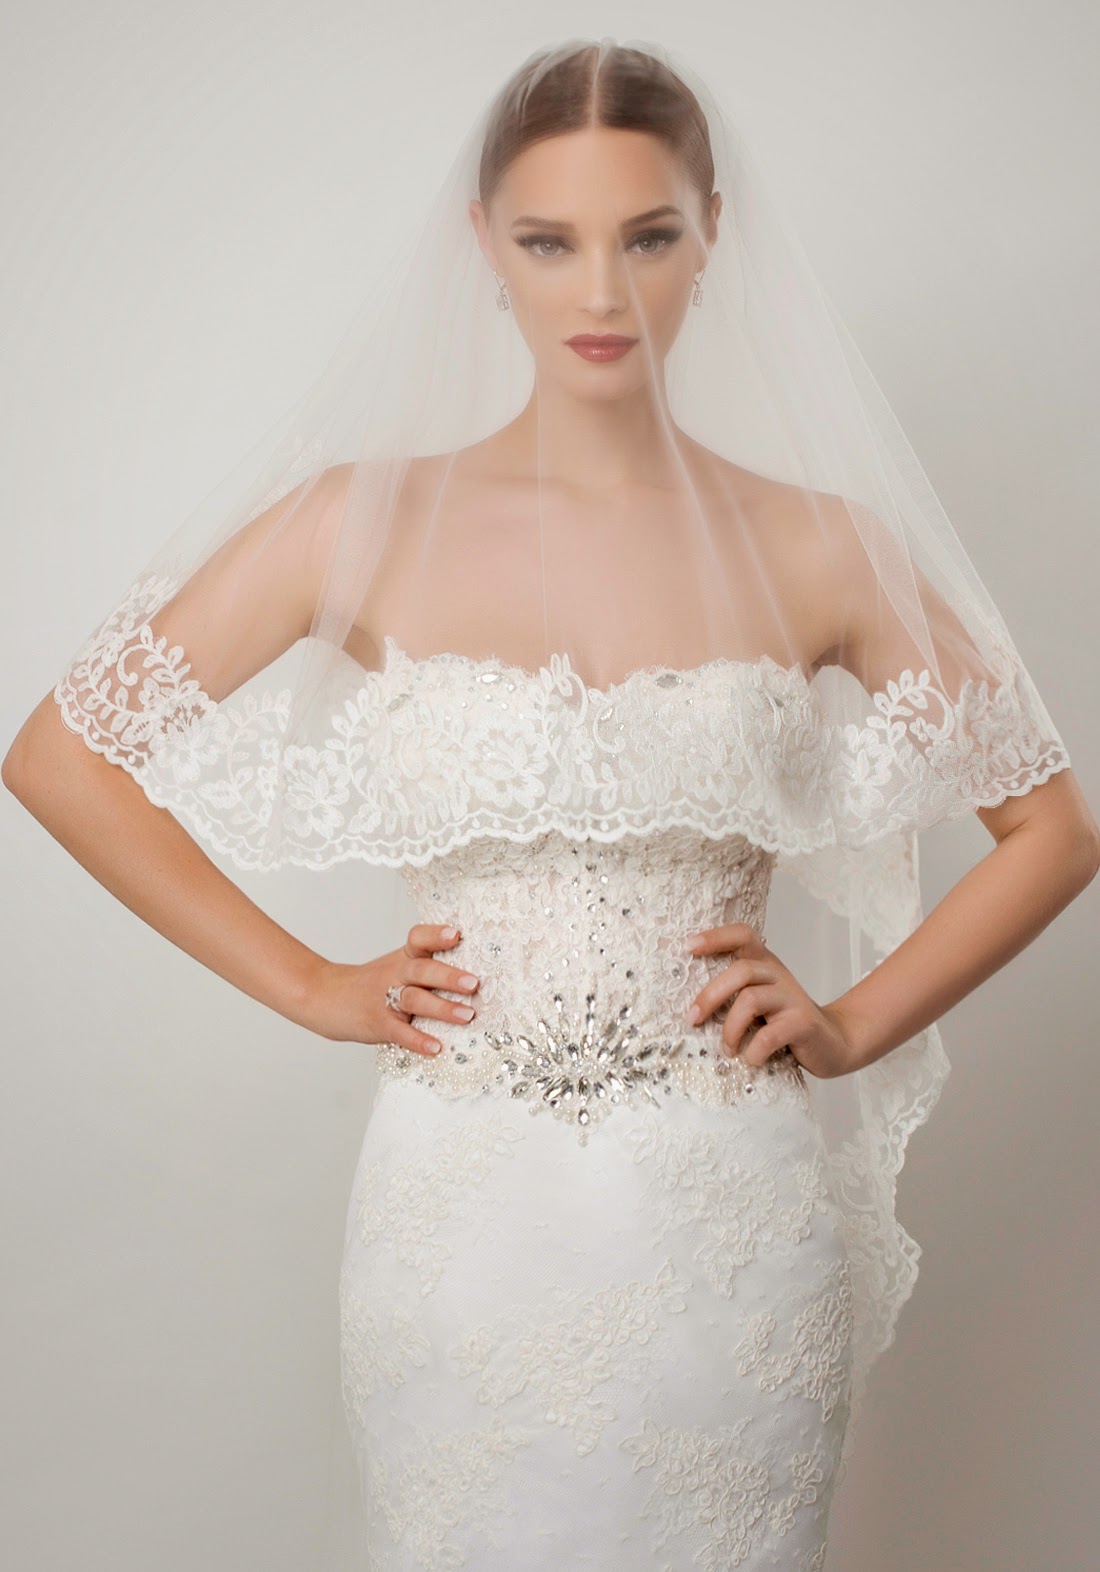 I am a Woman in Love: Wedding Inspiration: 2015 Bridal Veils by Bien Savvy